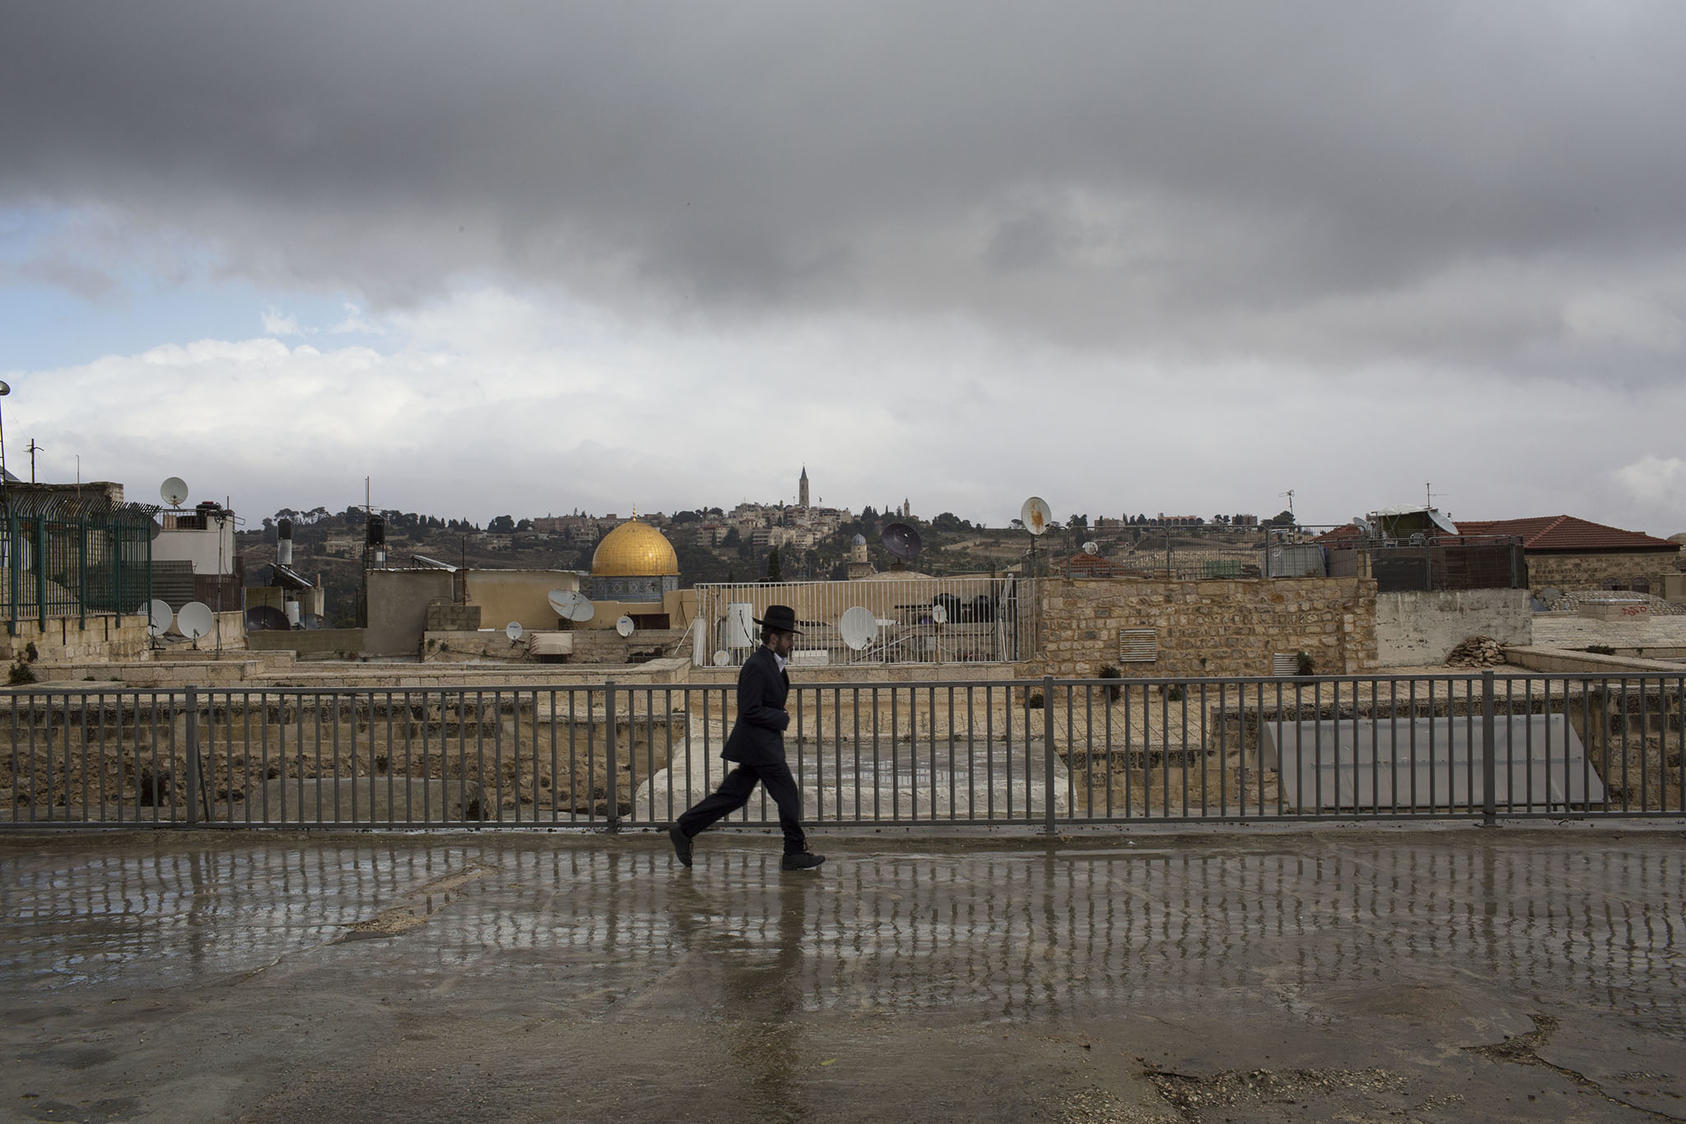 An ultra-Orthodox Jewish man walking in the Old City of Jerusalem, Dec. 6, 2017. (Uriel Sinai/The New York Times)